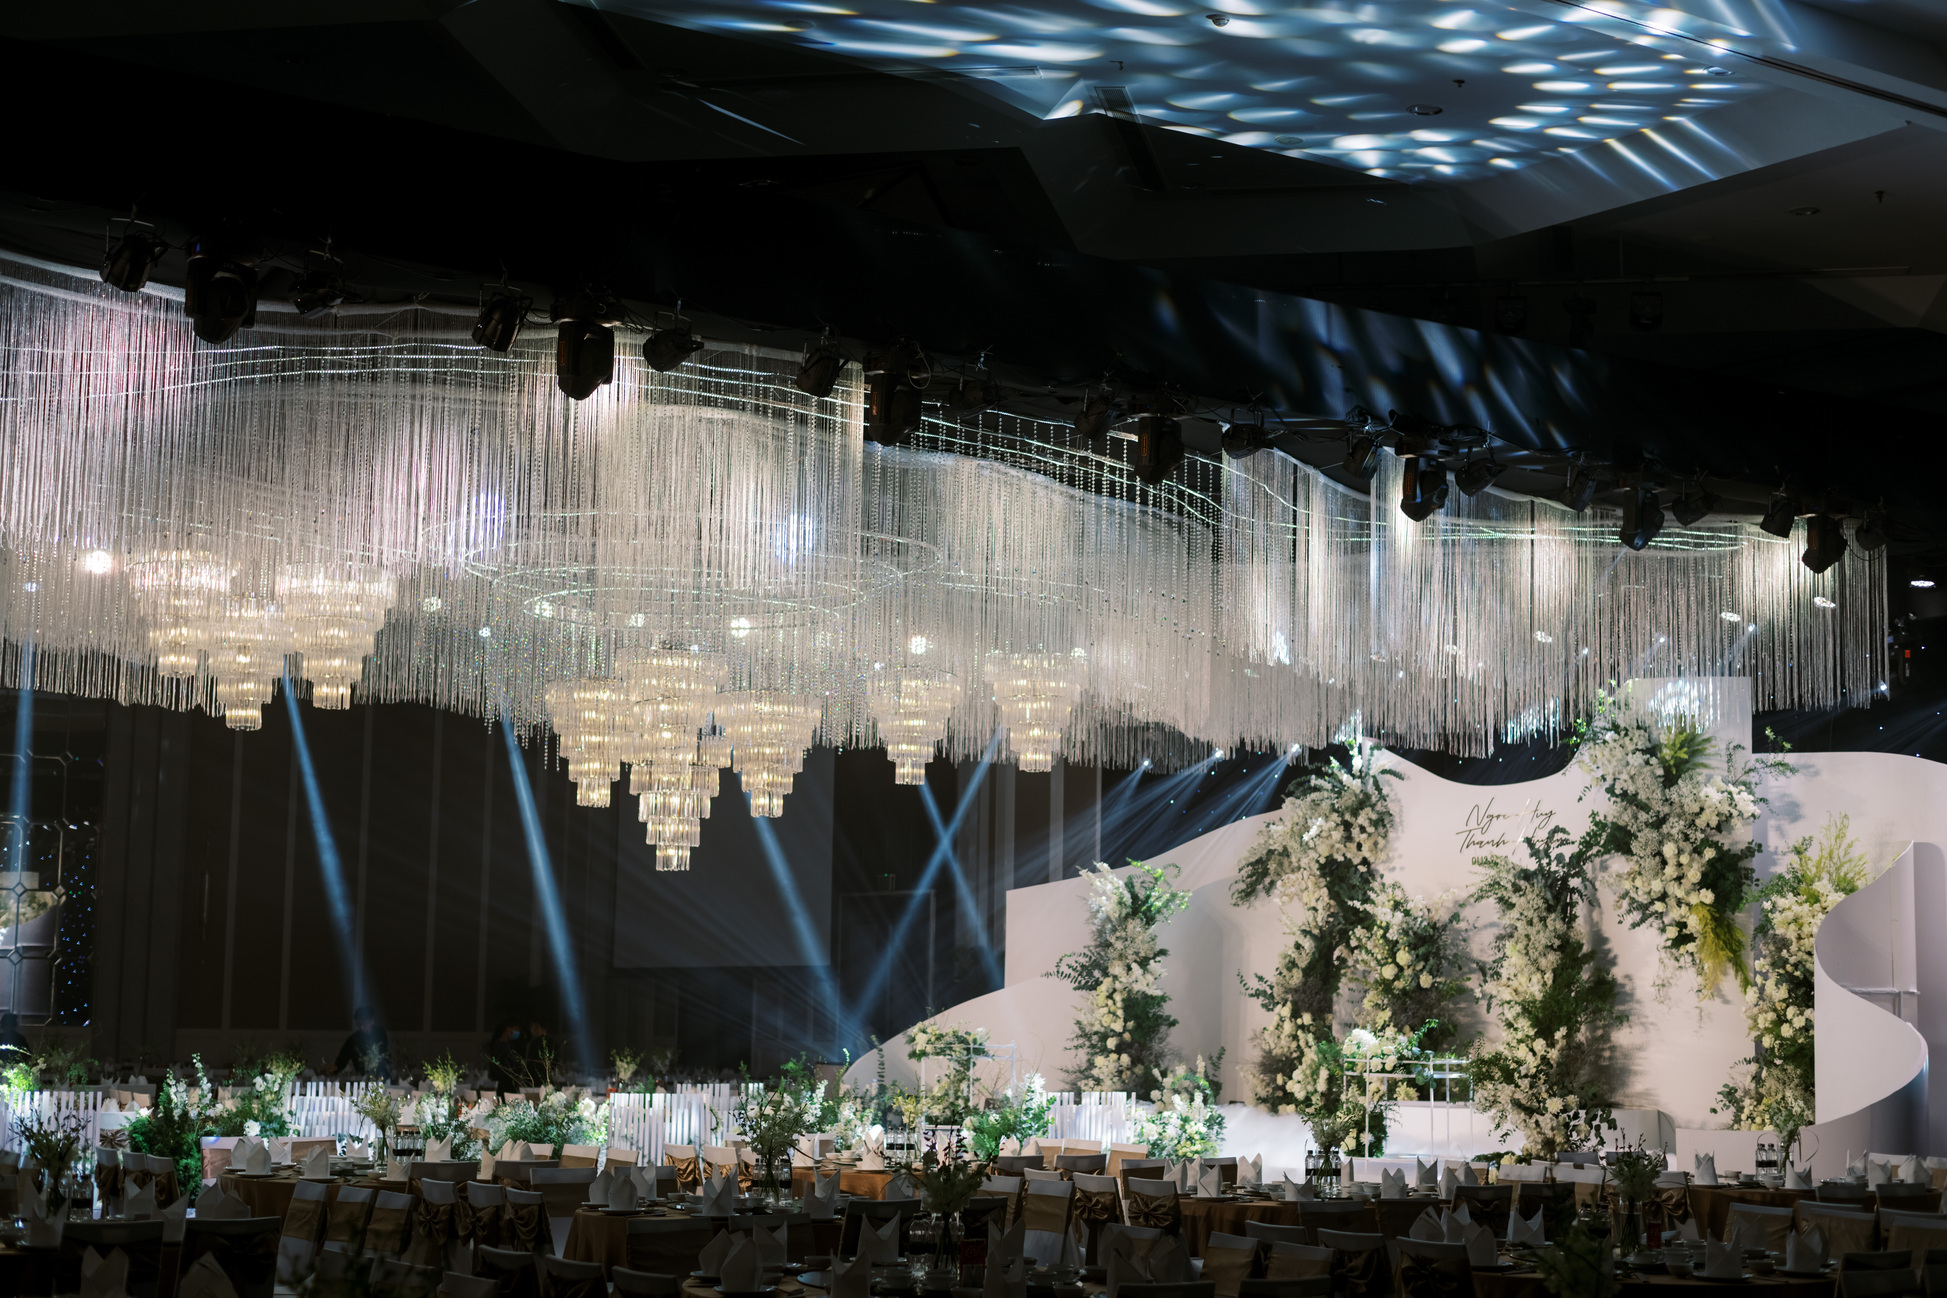 A magnificent ballroom wedding in Hanoi